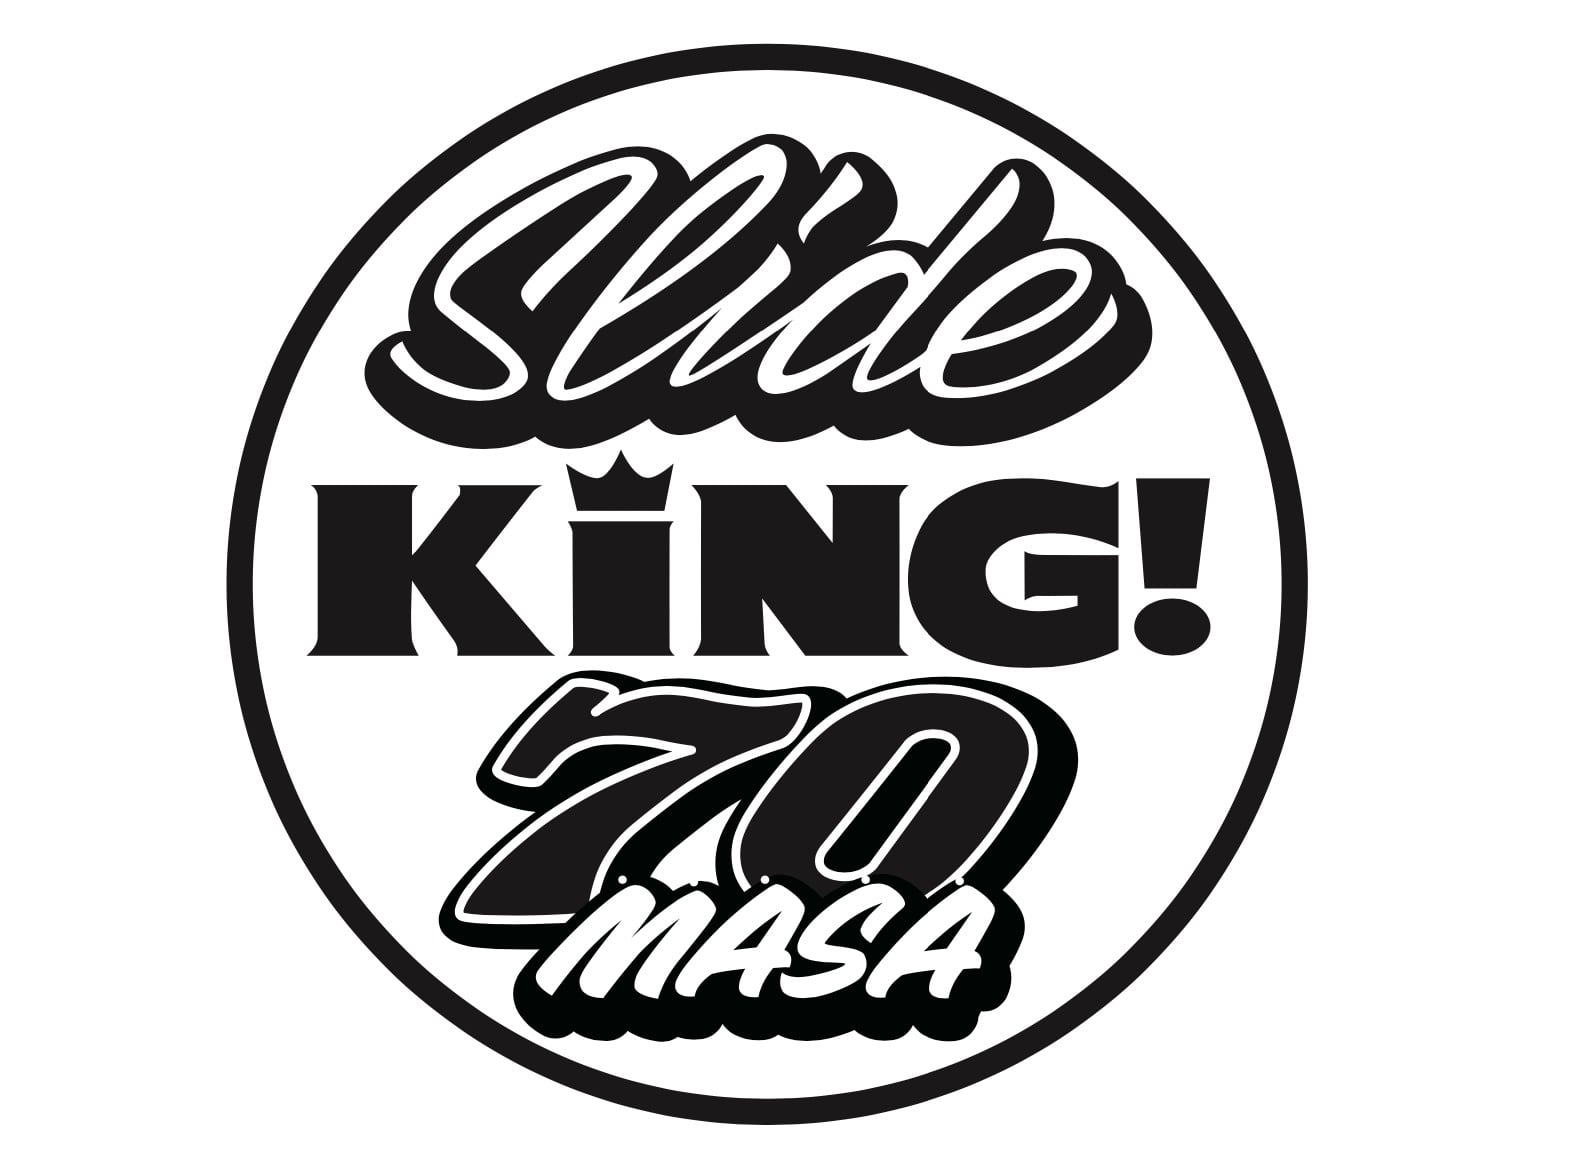 SLIDE KING MASA #70 GOOD WIN